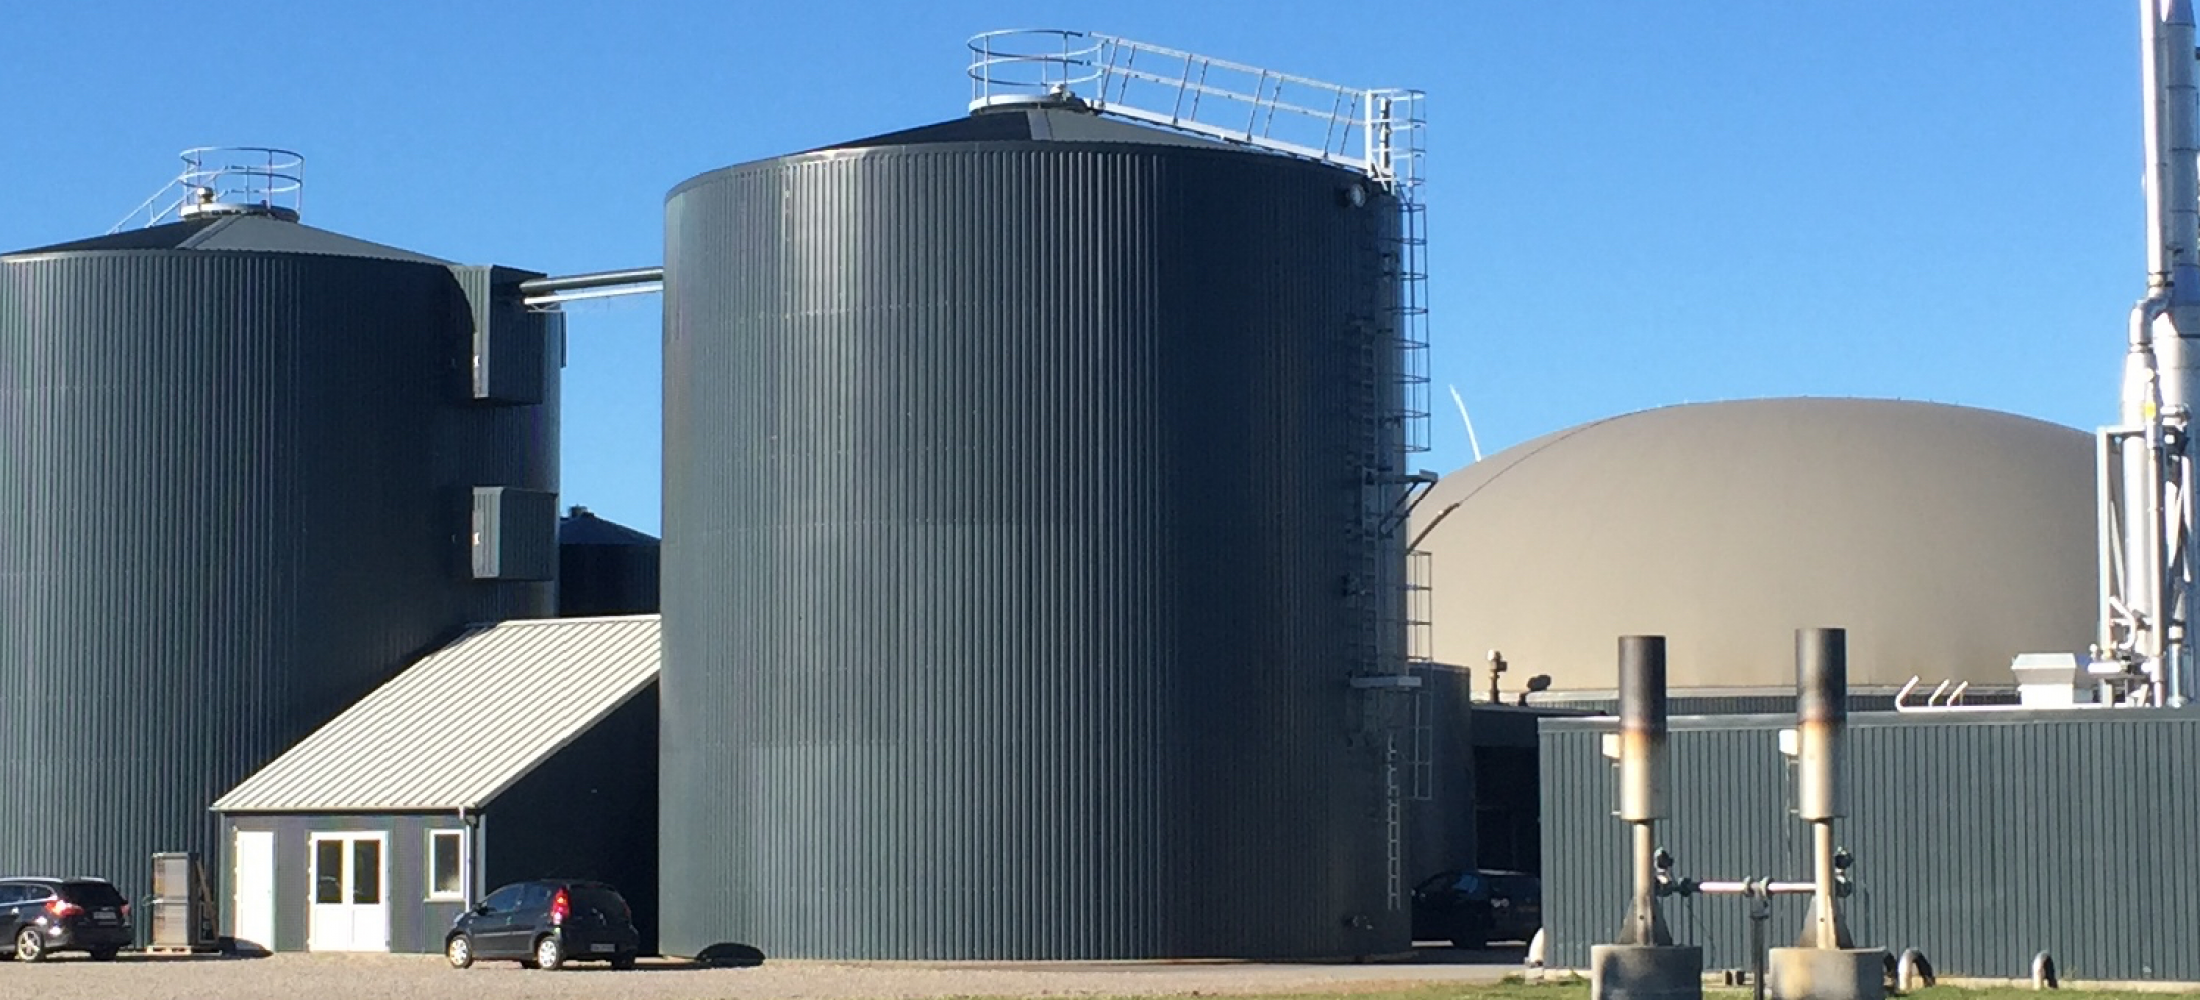 Great interest in Danish biogas technology